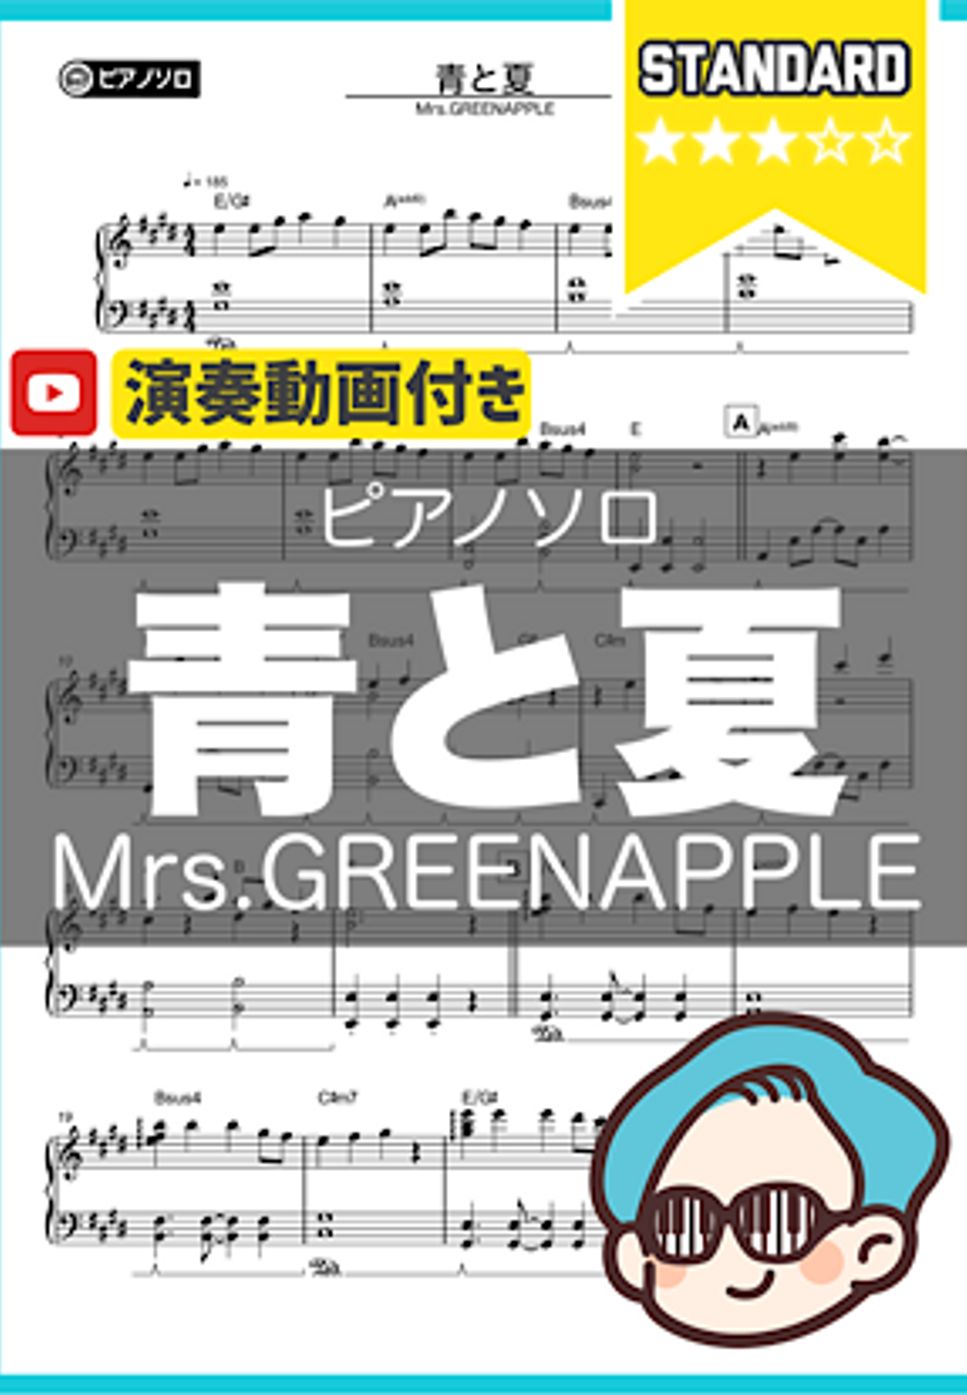 Mrs.GREENAPPLE - 青と夏(中級ver.) by シータピアノ